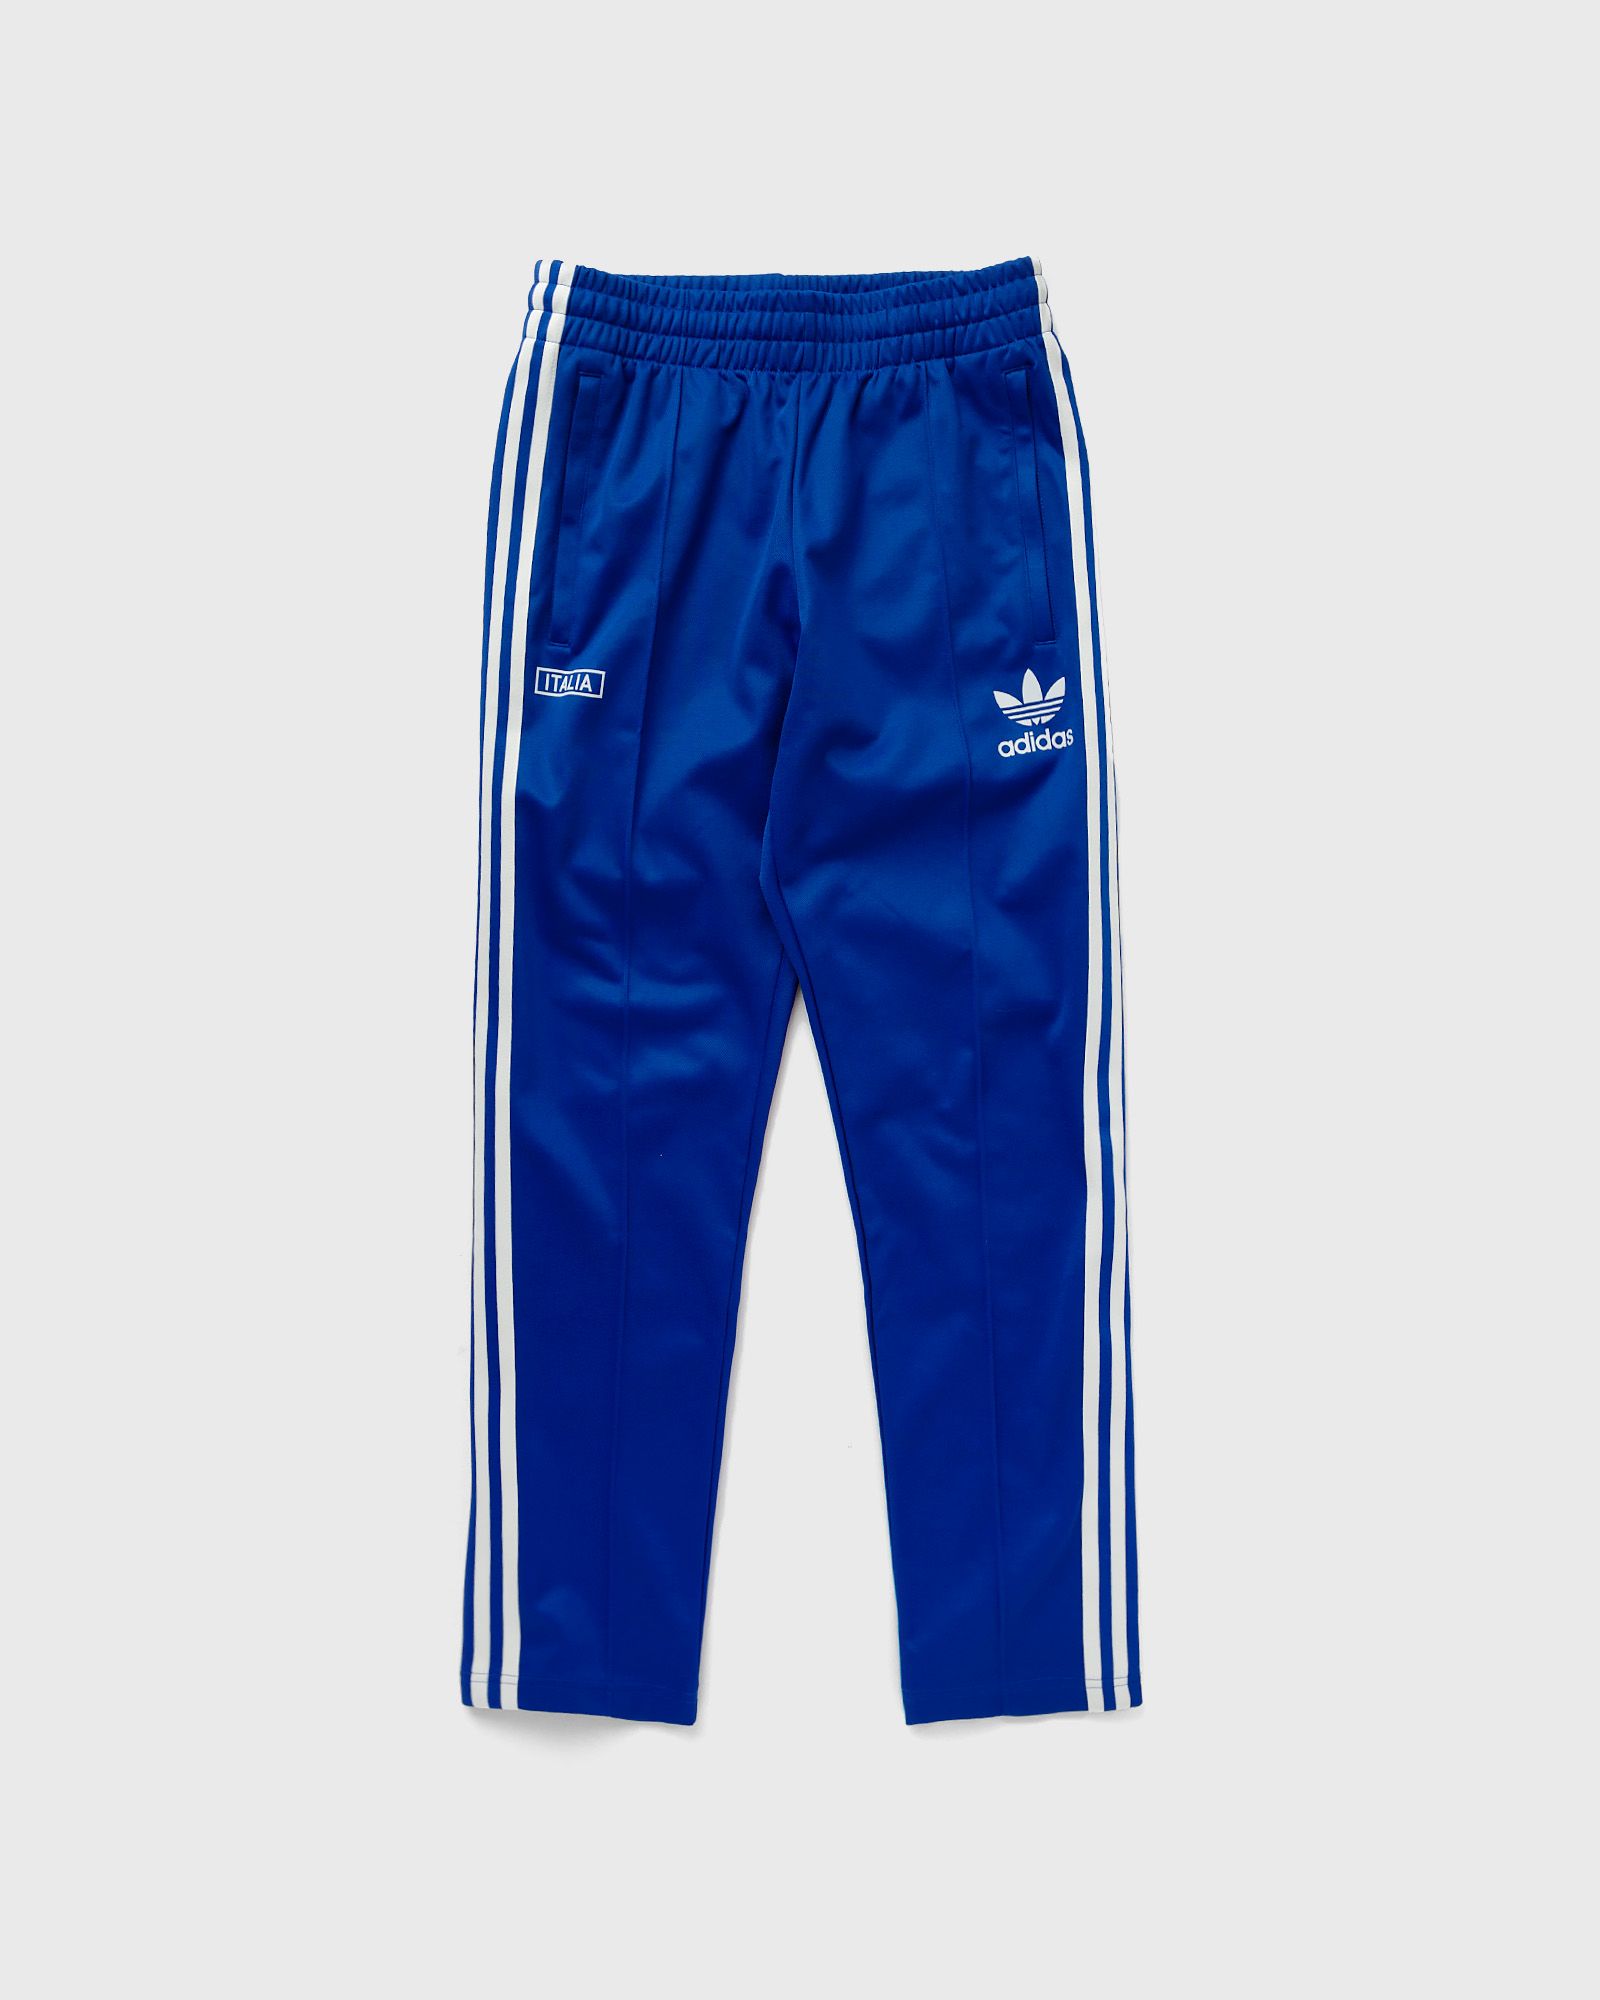 Adidas - italy og beckenbauer trackpants men track pants blue in größe:xl